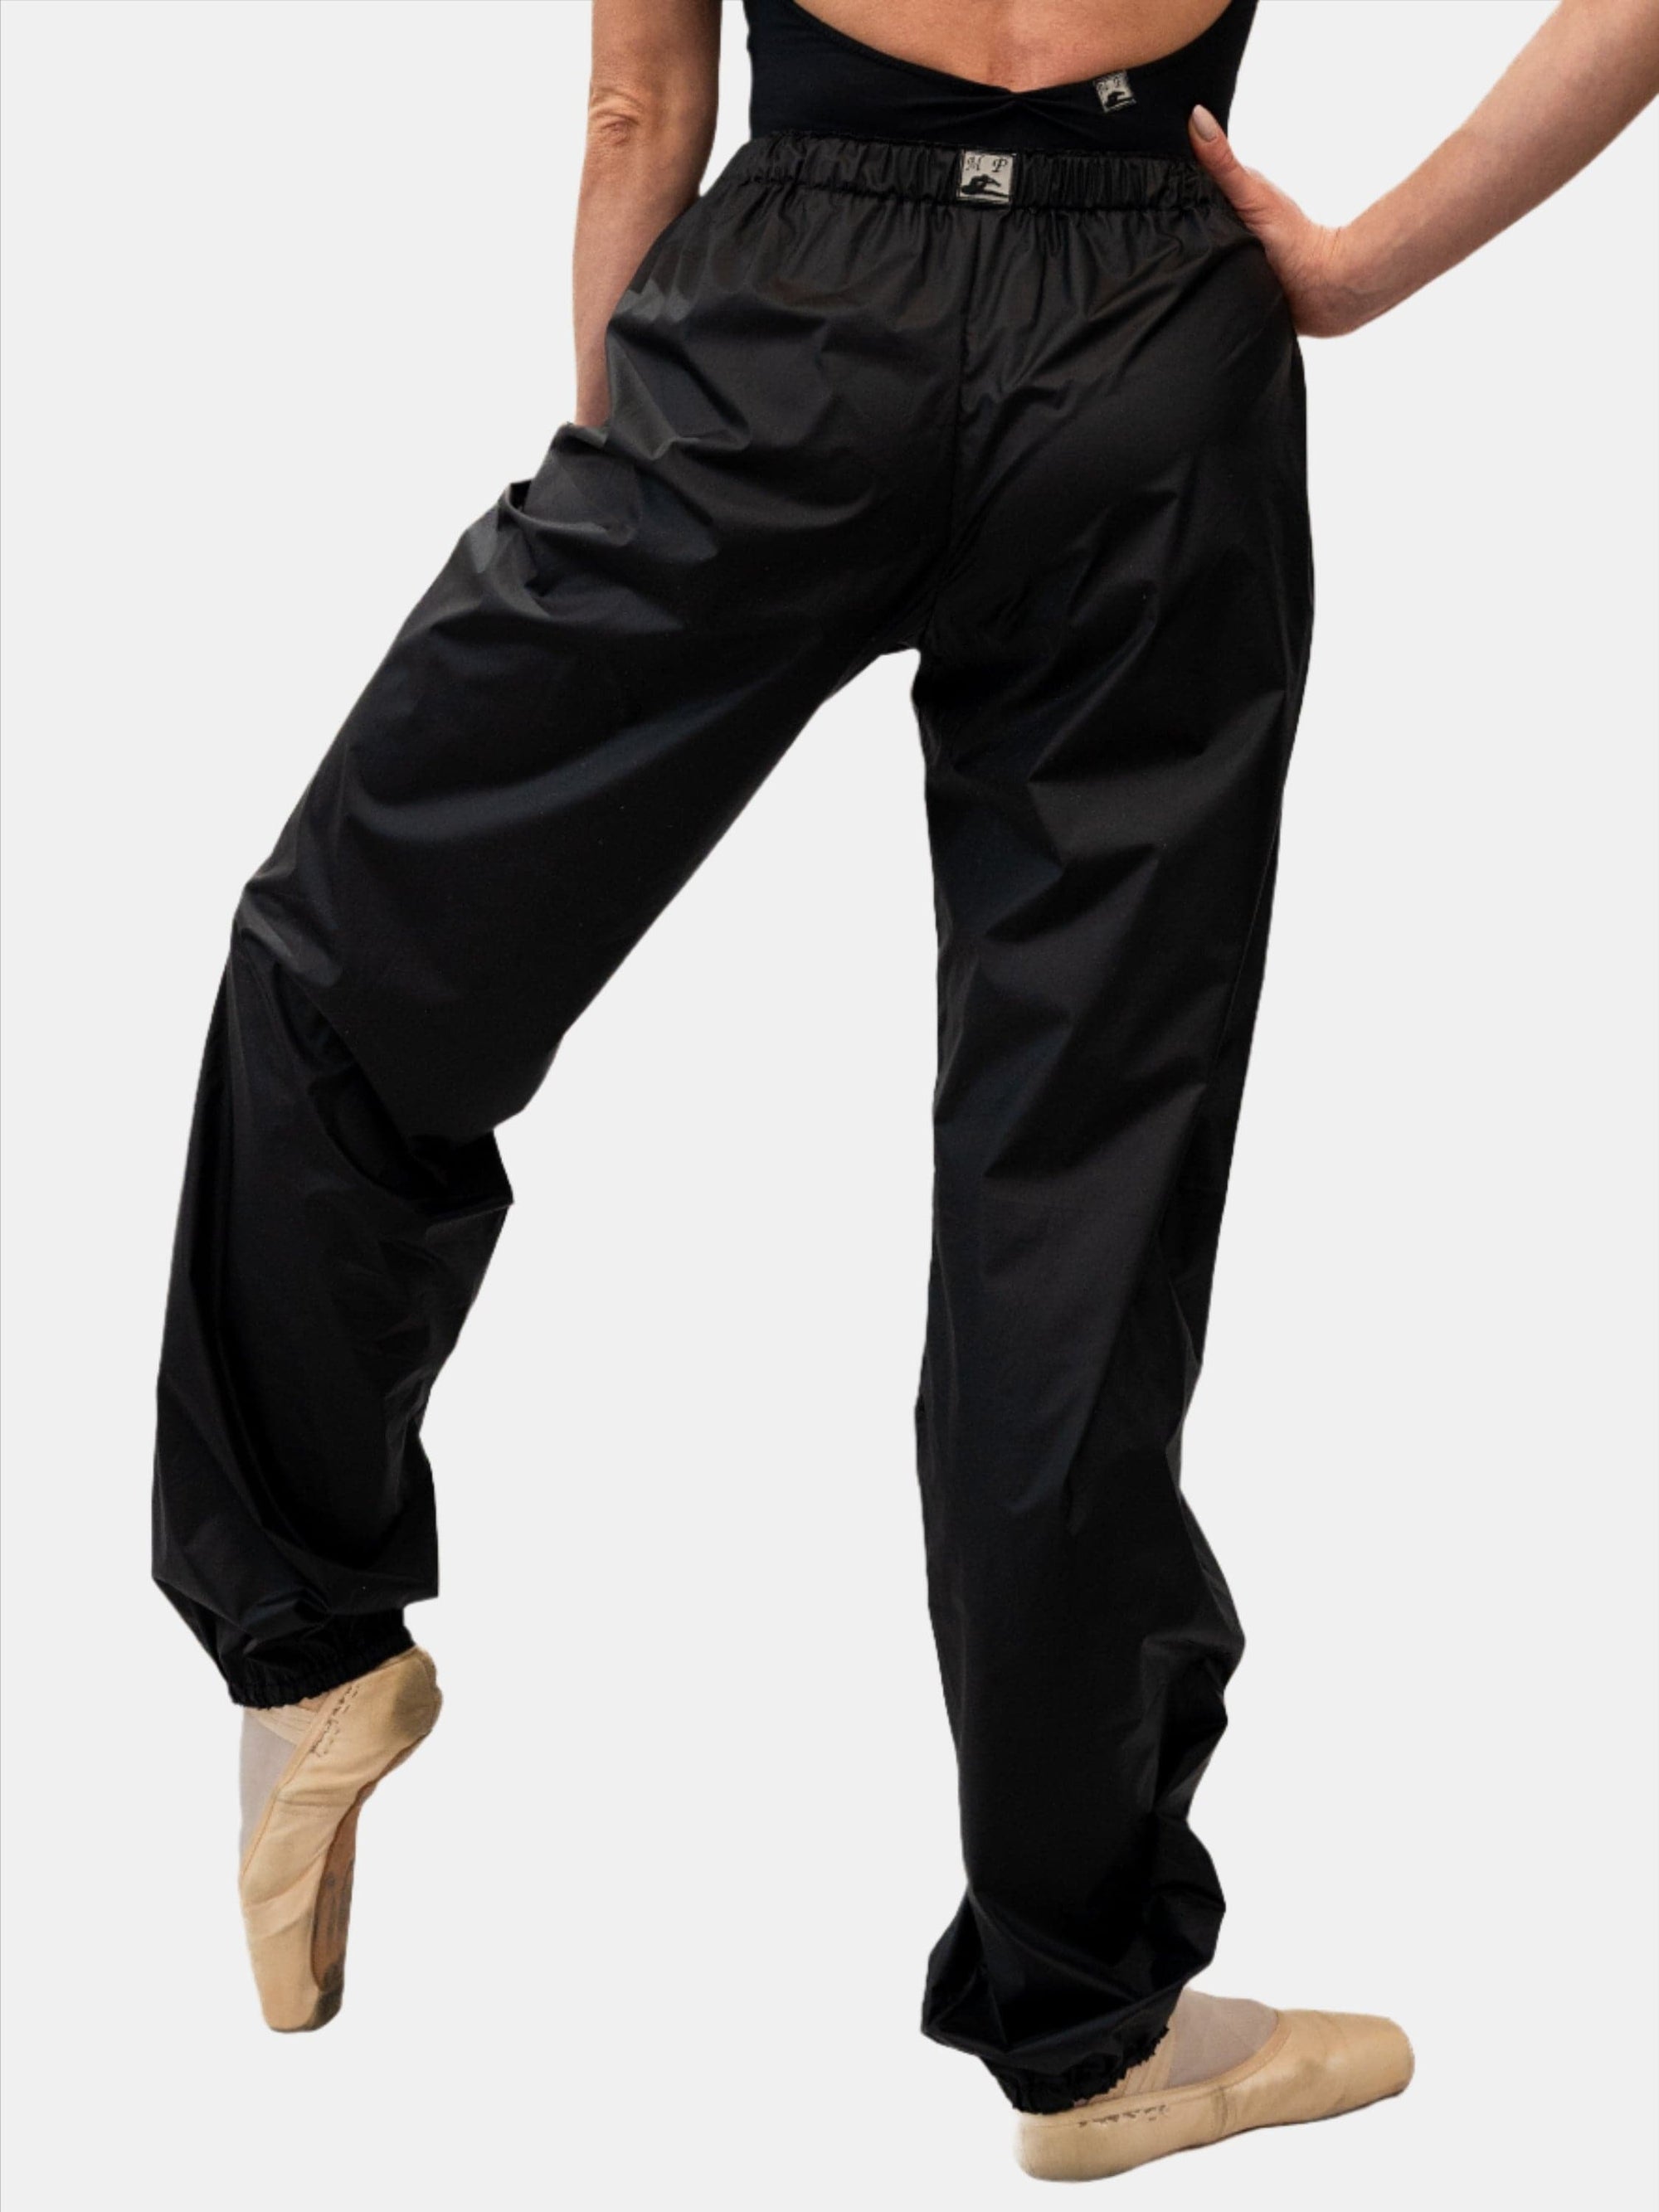 Black Warm-up Dance Trash Bag Pants MP5003 - Atelier della Danza MP